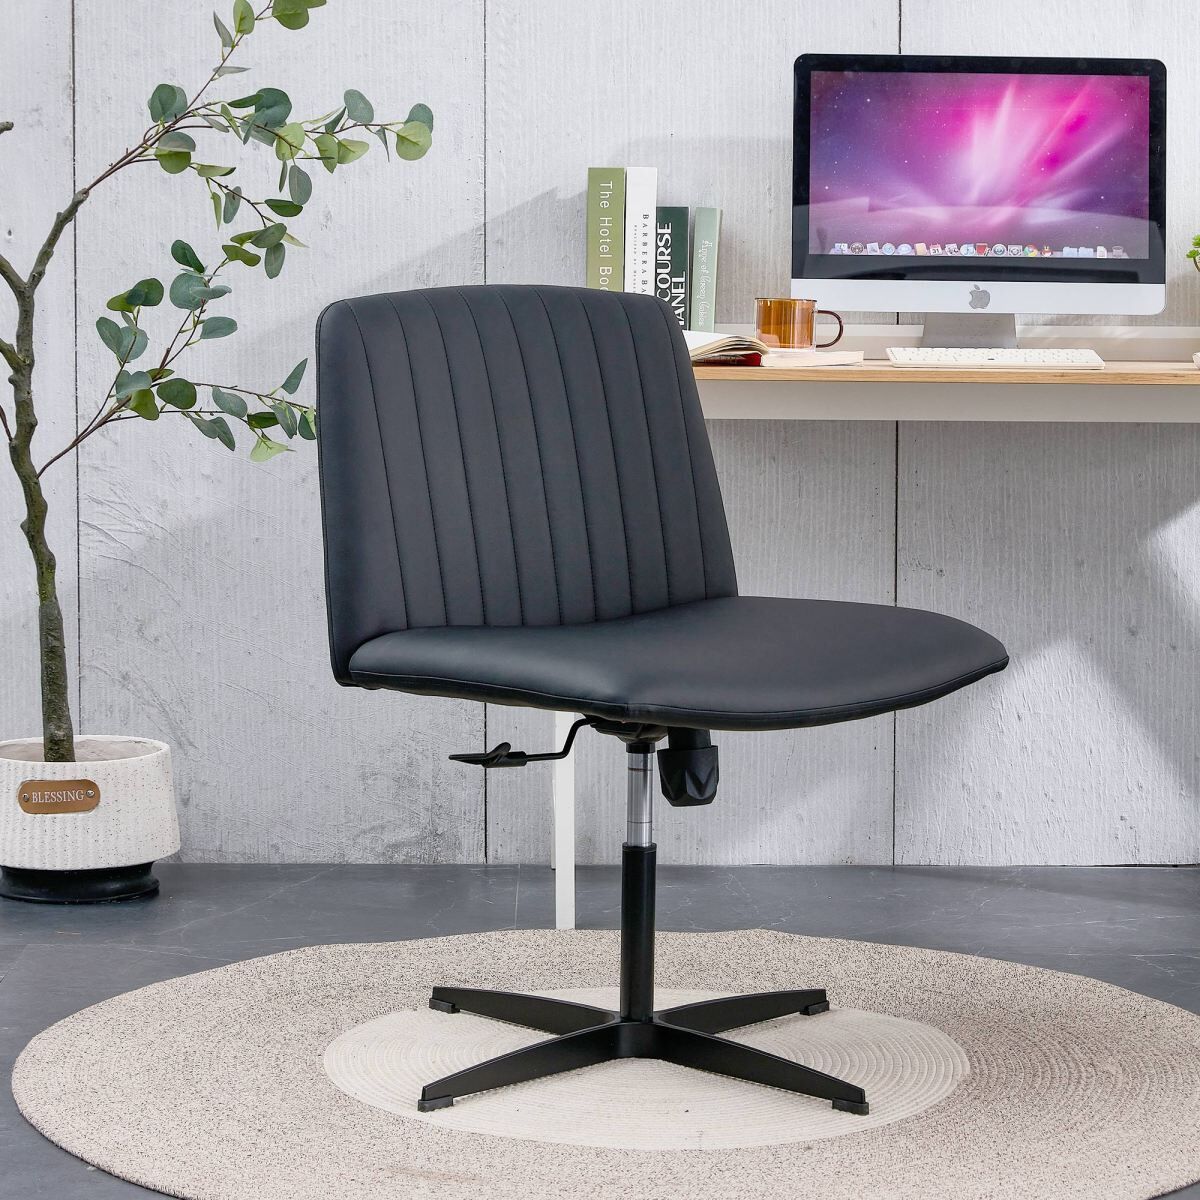 Simplie Fun Black High Grade Pu Material. Home Computer Chair Office Chair Adjustable 360 ° Swivel Cushion Chair With Black Foot Swivel Chair Makeup Chair Study D